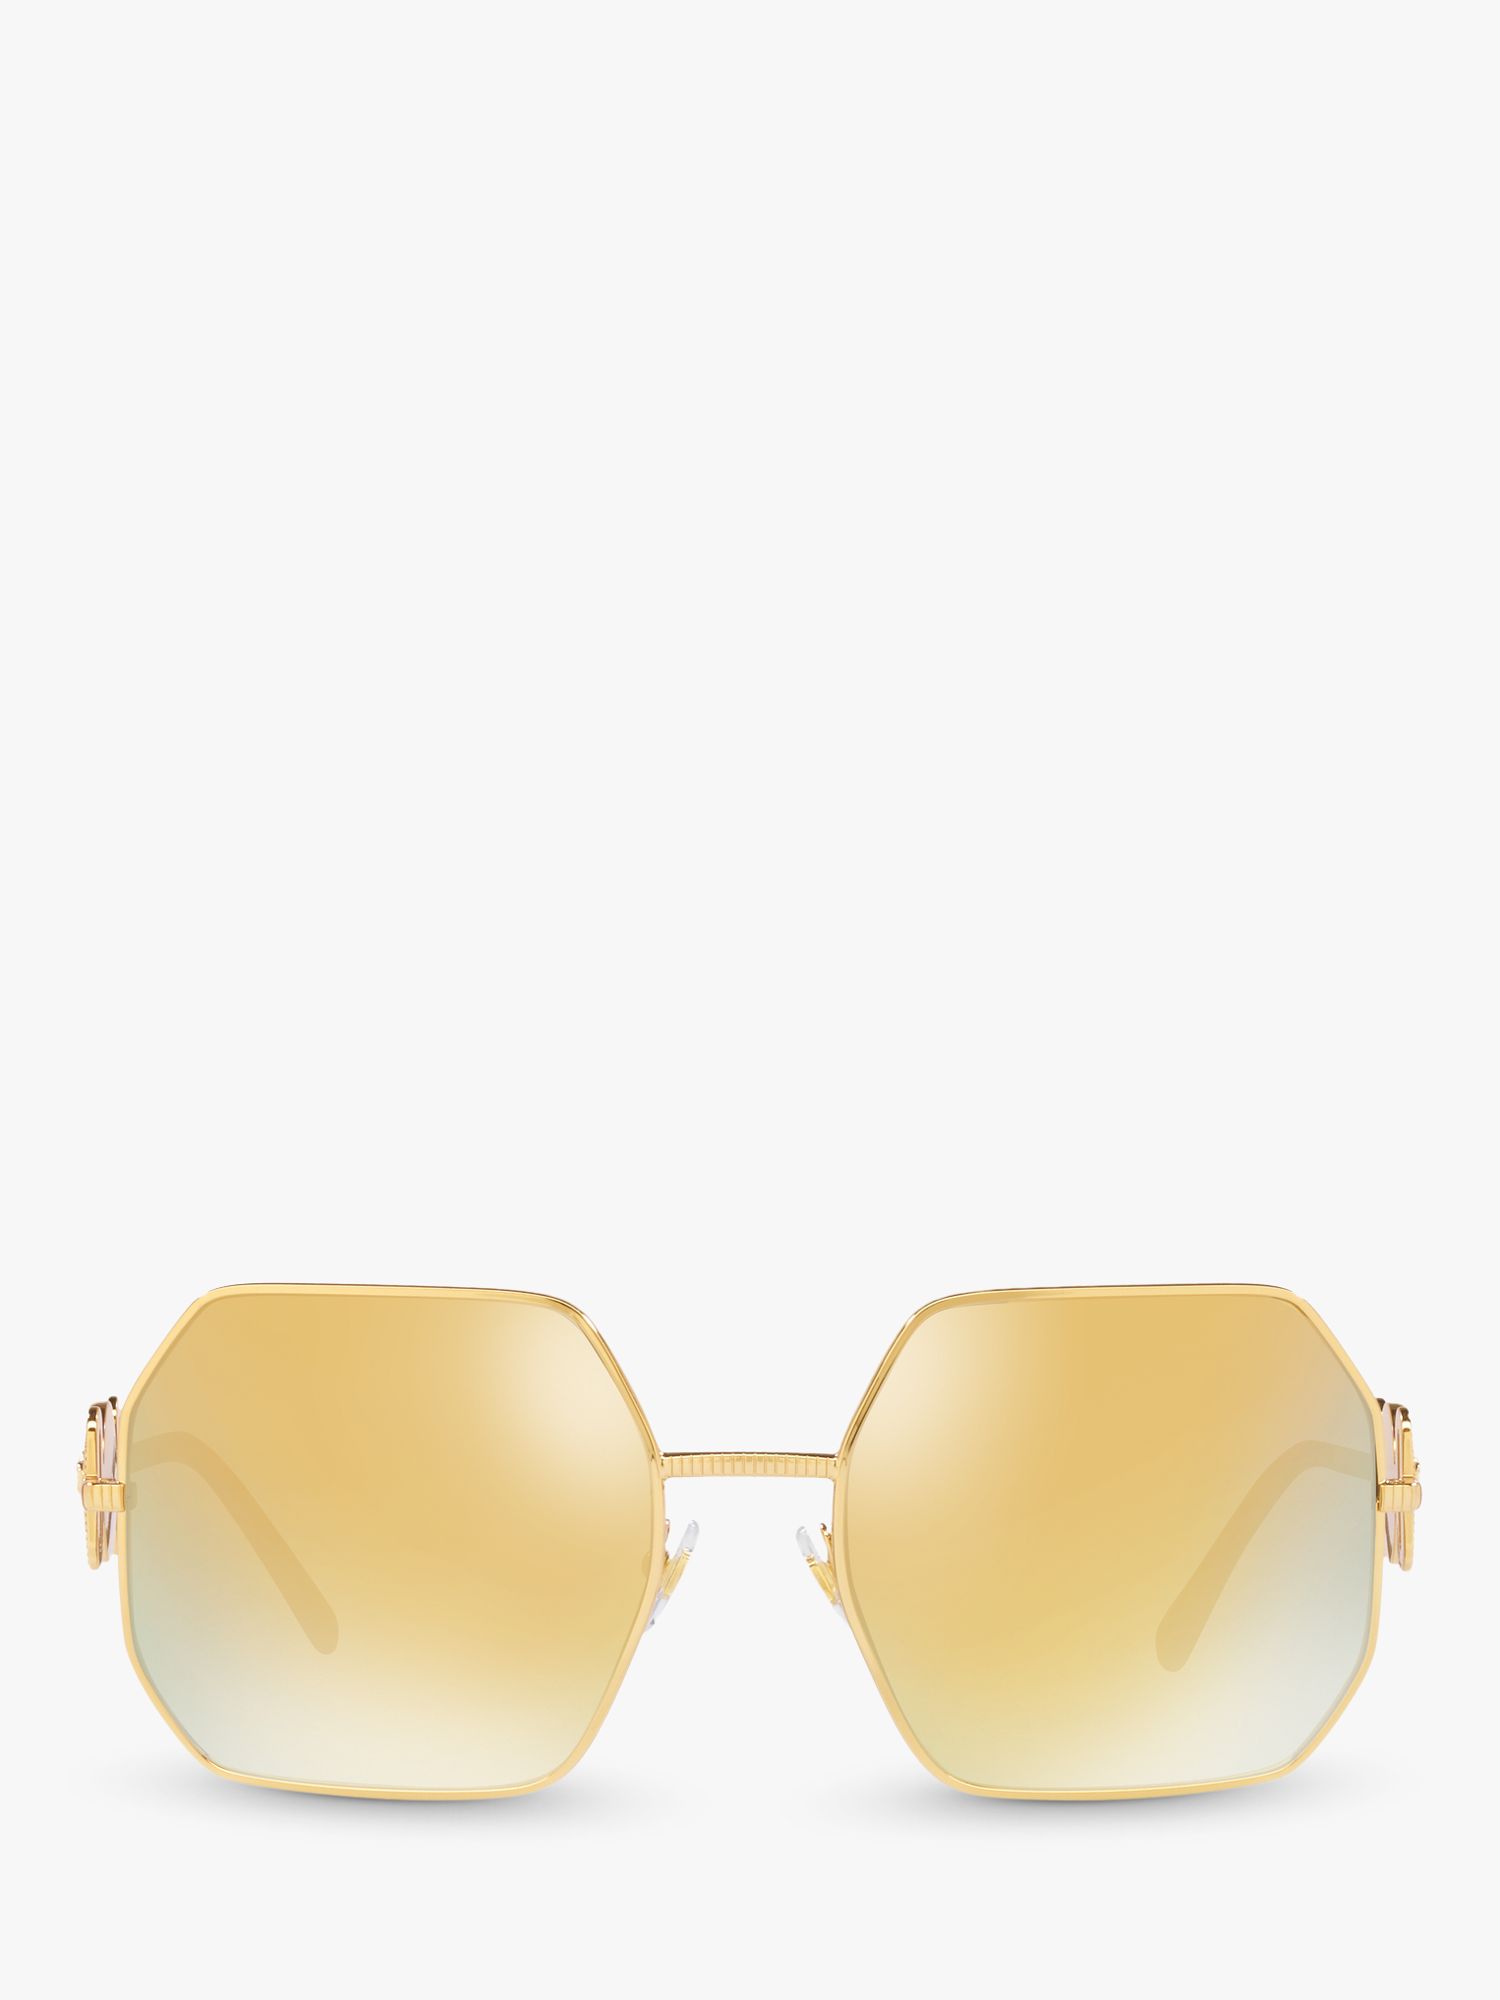 Versace VE2248 Women's Irregular Sunglasses, Gold/Mirror Yellow